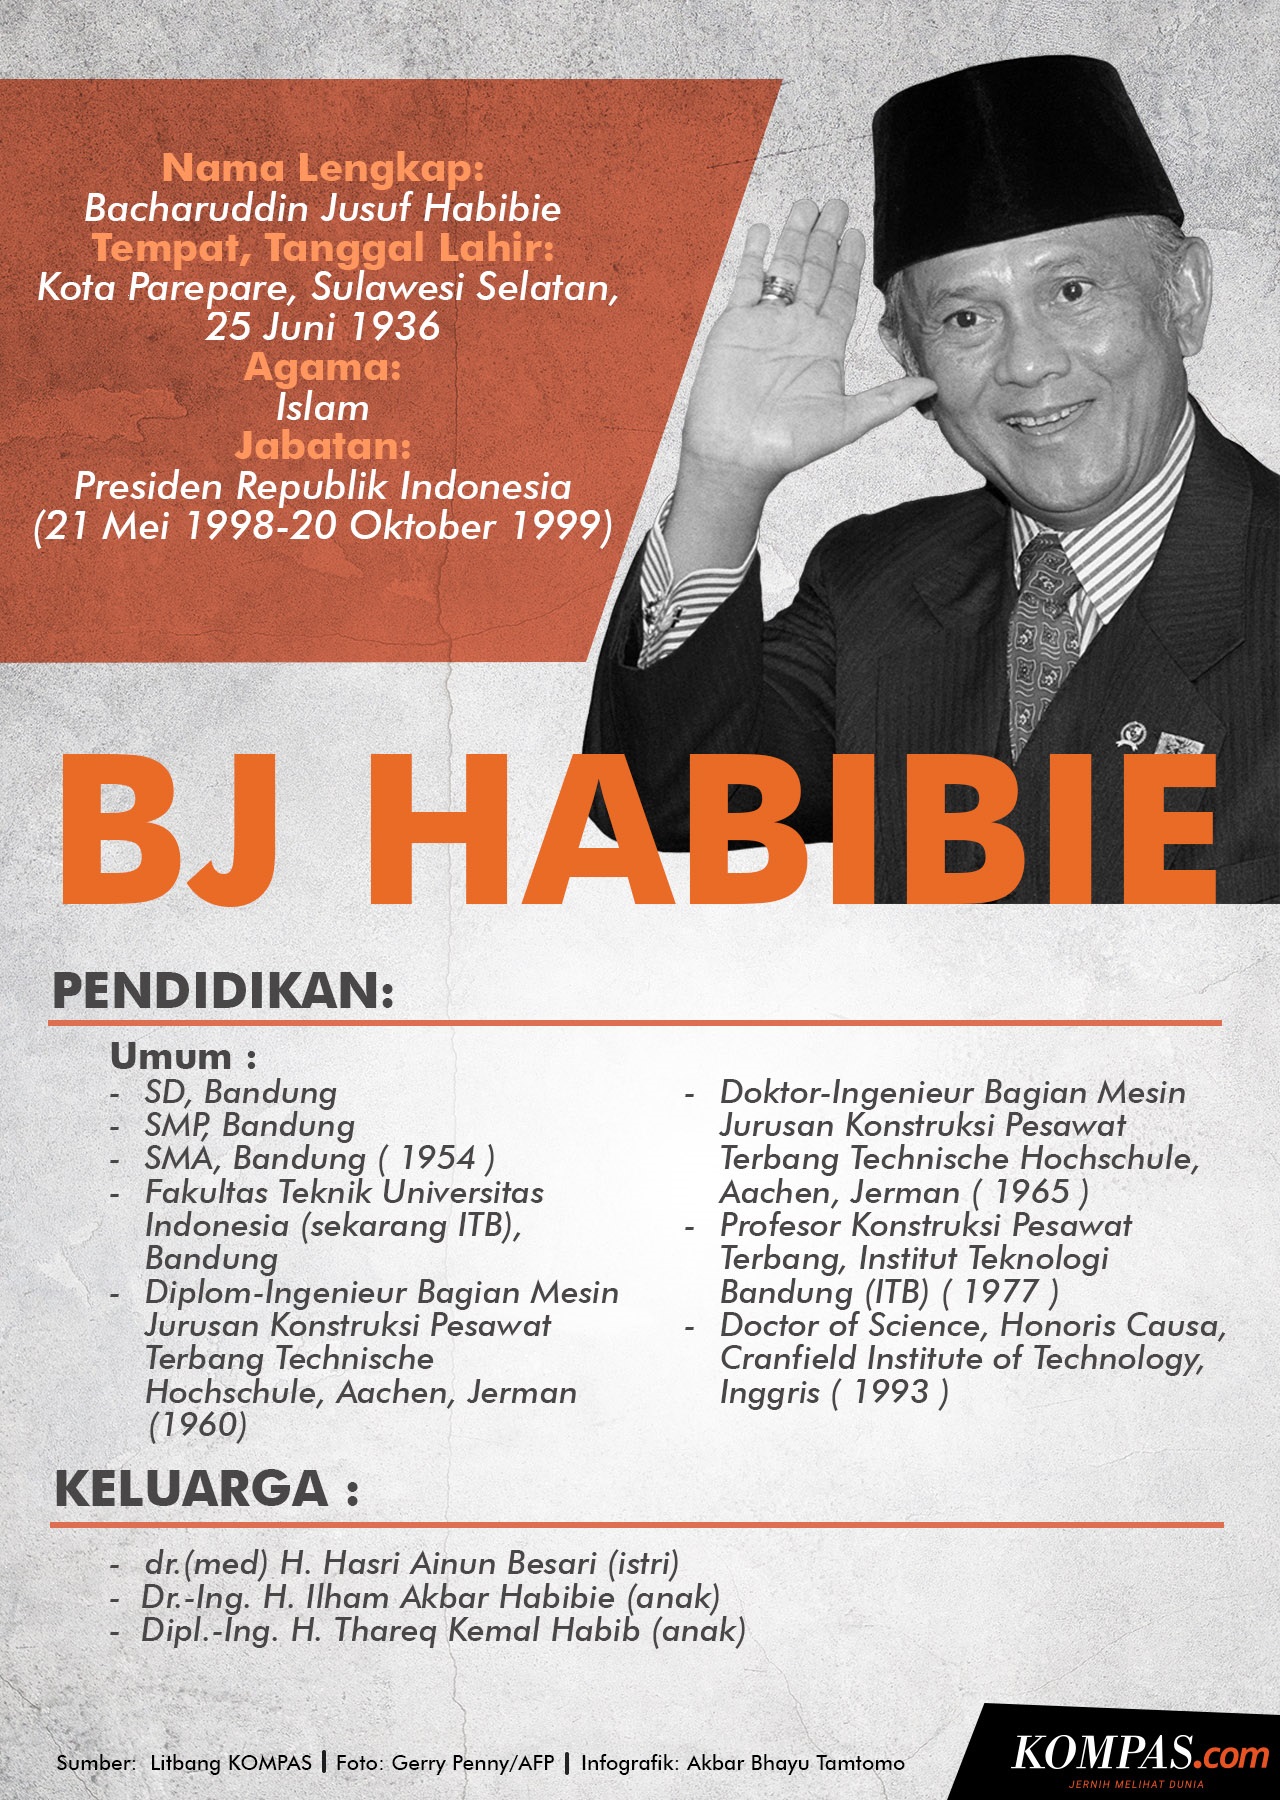 biography text b.j. habibie